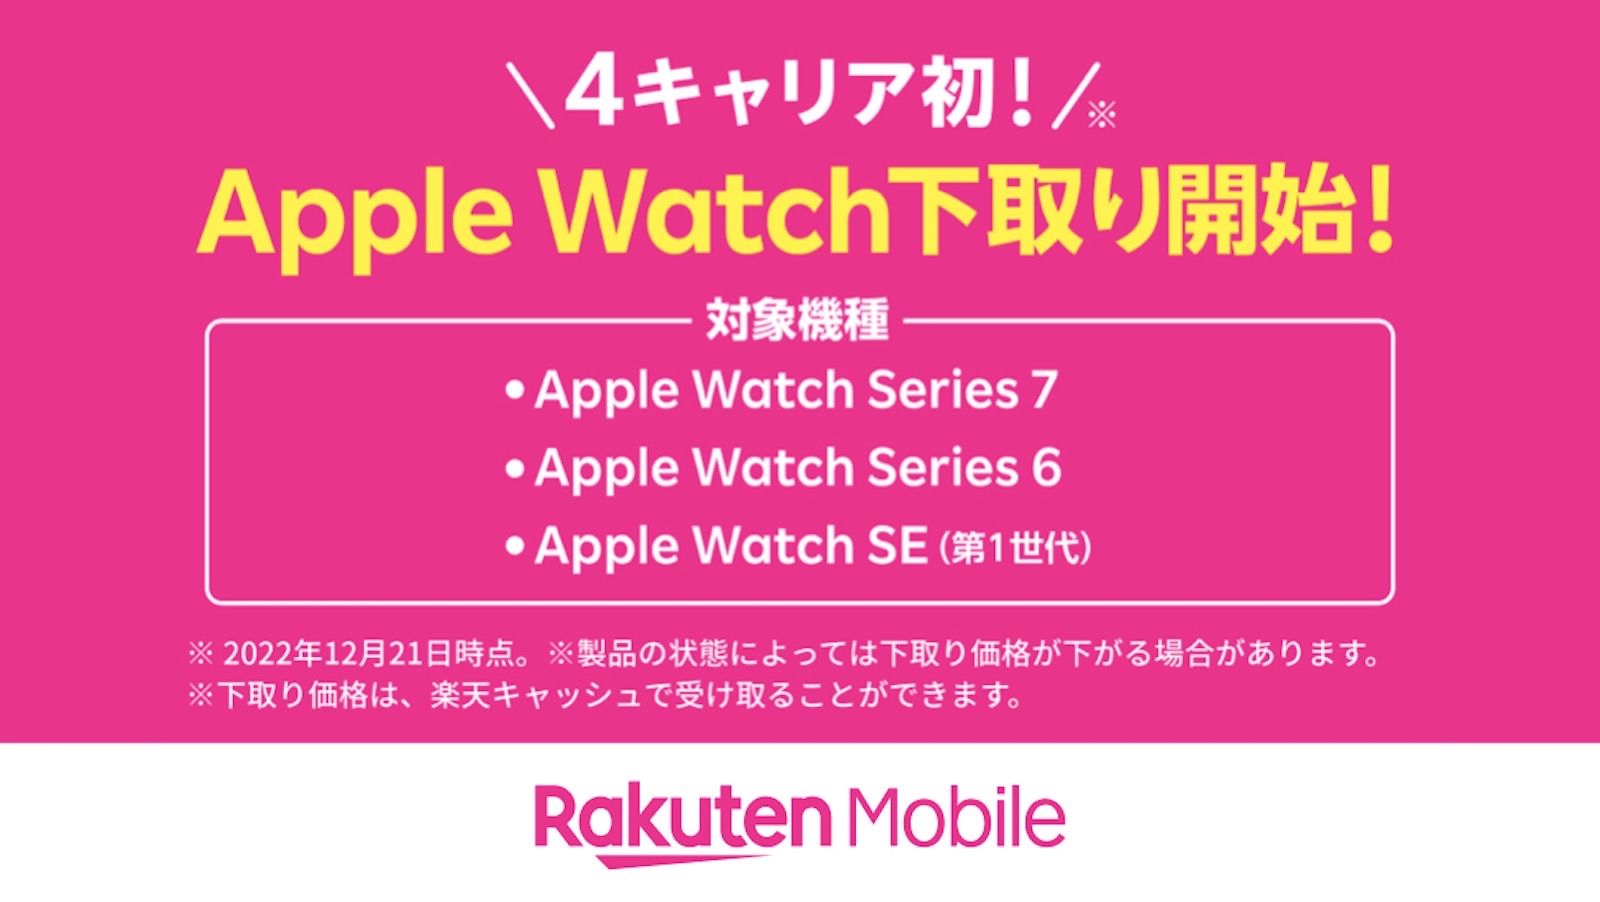 Rakuten mobile apple watch